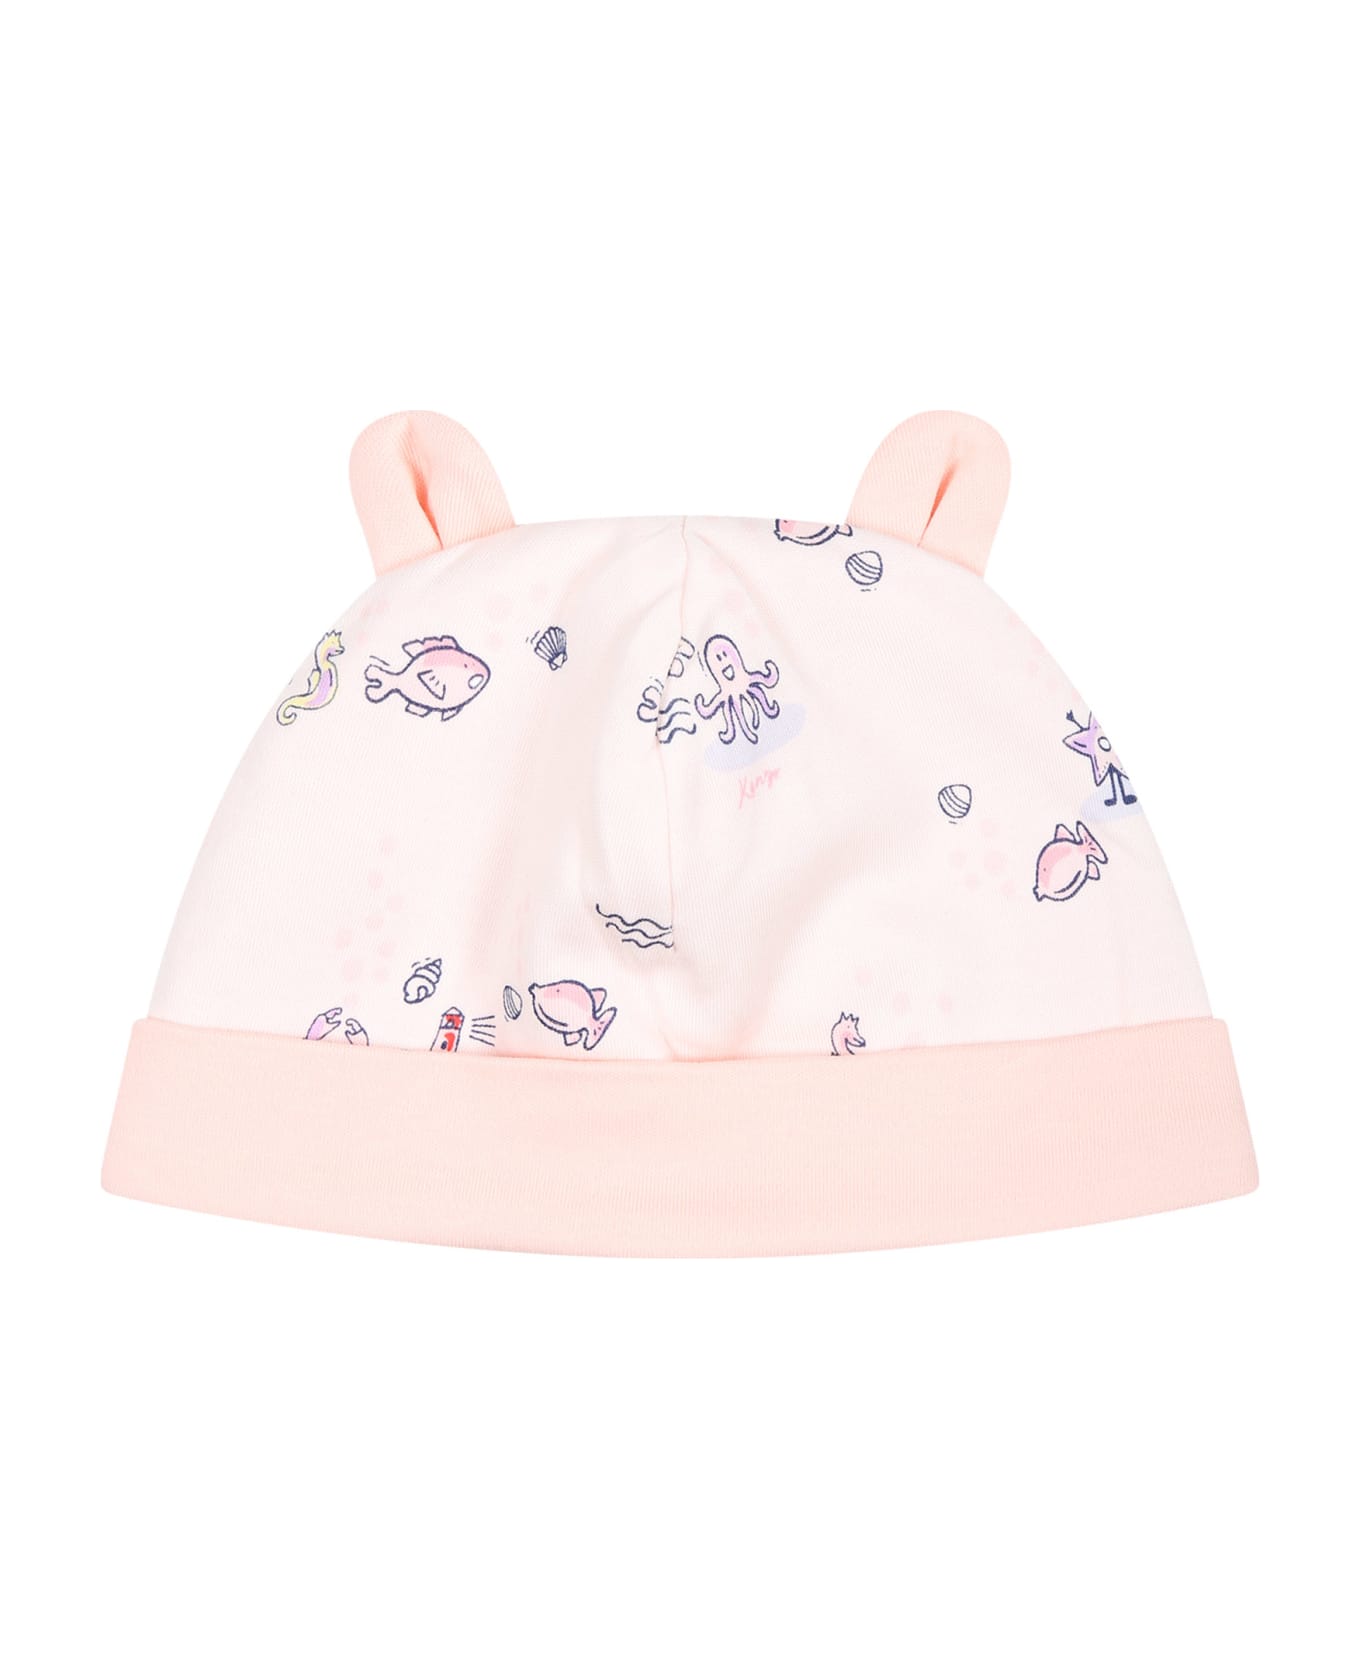 Kenzo Kids Pink Set For Baby Girl With Marine Animal Print - Pink